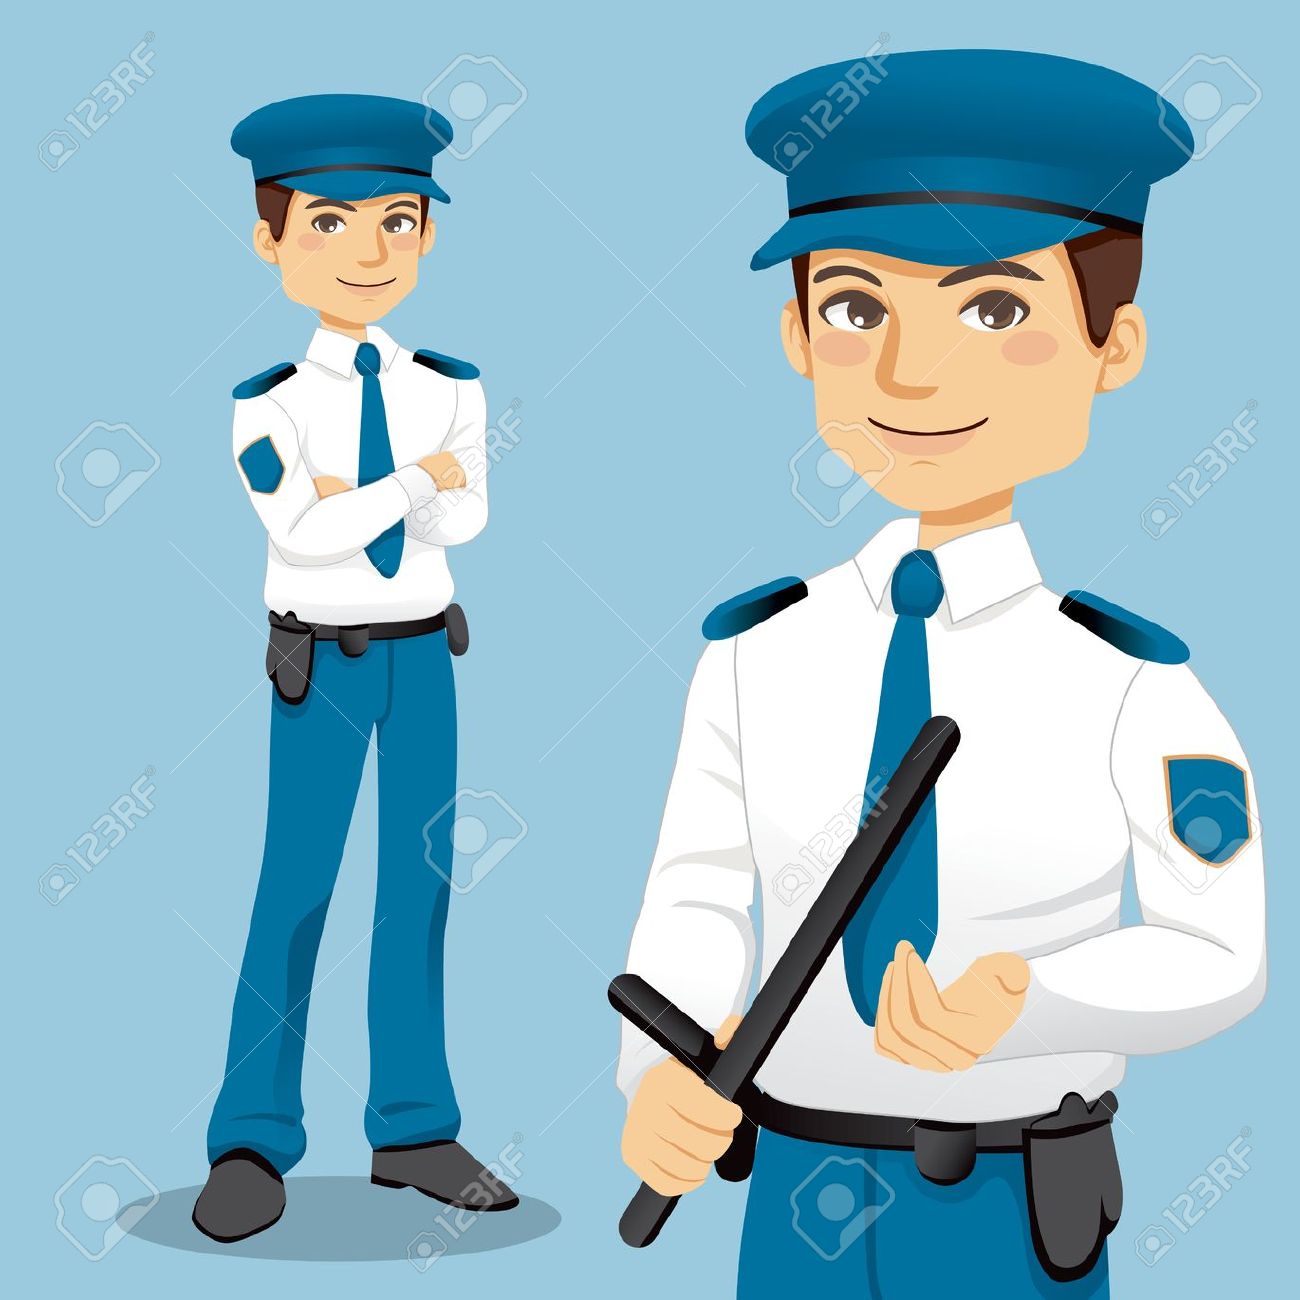 guard clipart